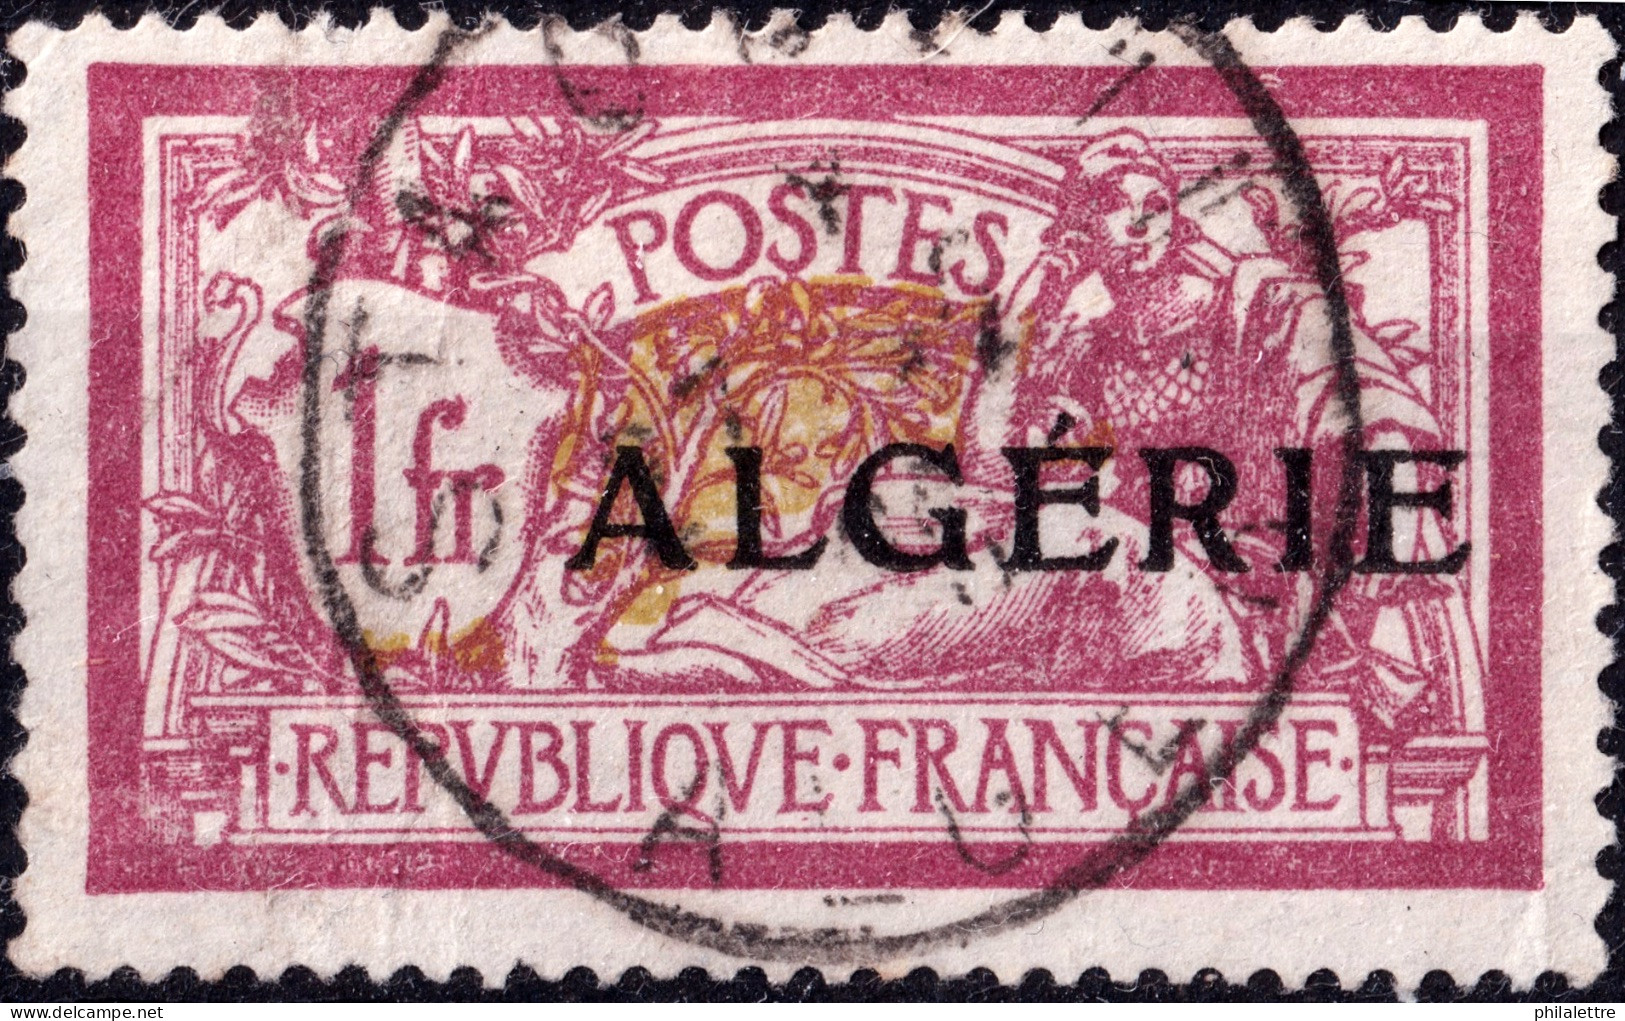 ALGÉRIE - Ca.1925 - TàD "STAOUELI / ALGER" Sur Yv.29 1fr Merson - TB - Used Stamps